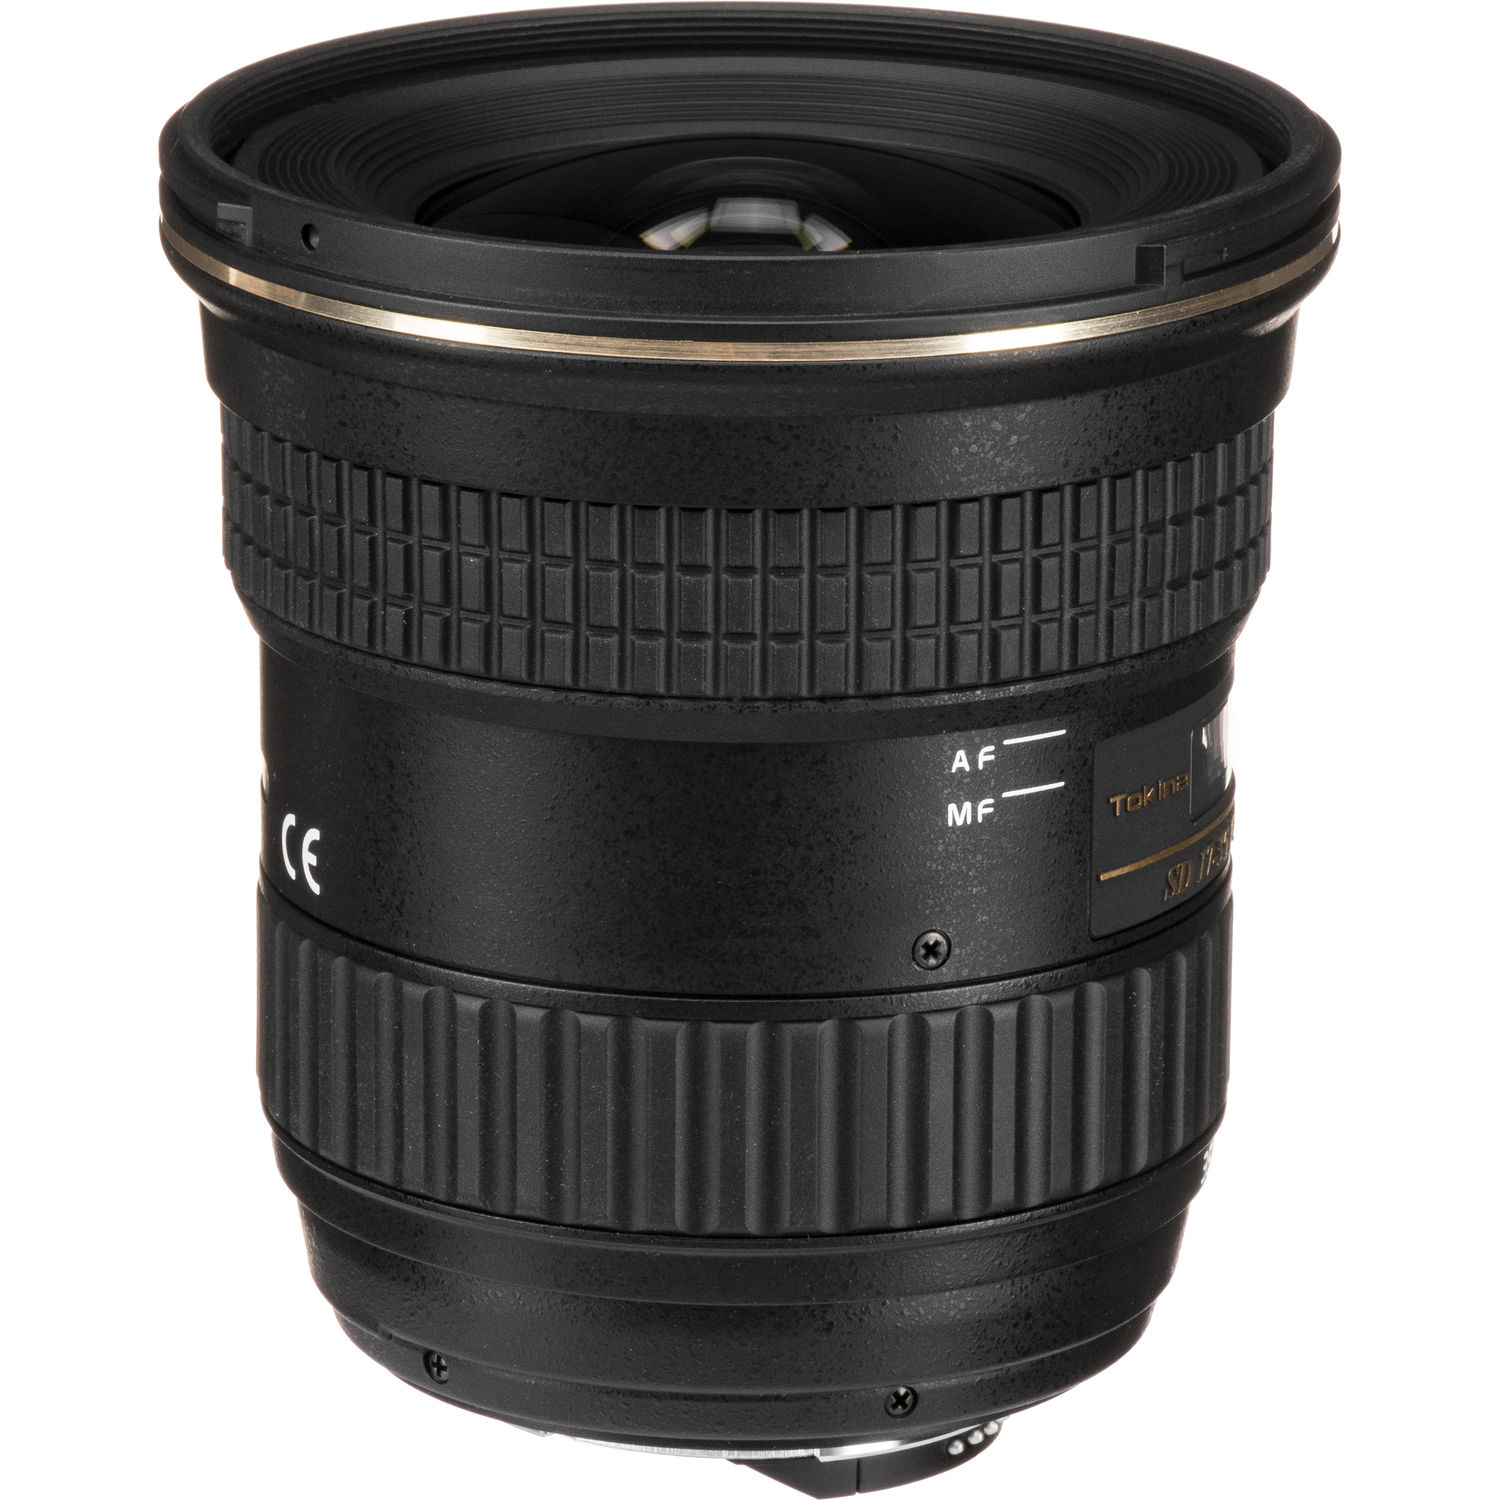 Tokina 17-35mm f/4 Pro FX Lens for Nikon Cameras - GP Pro